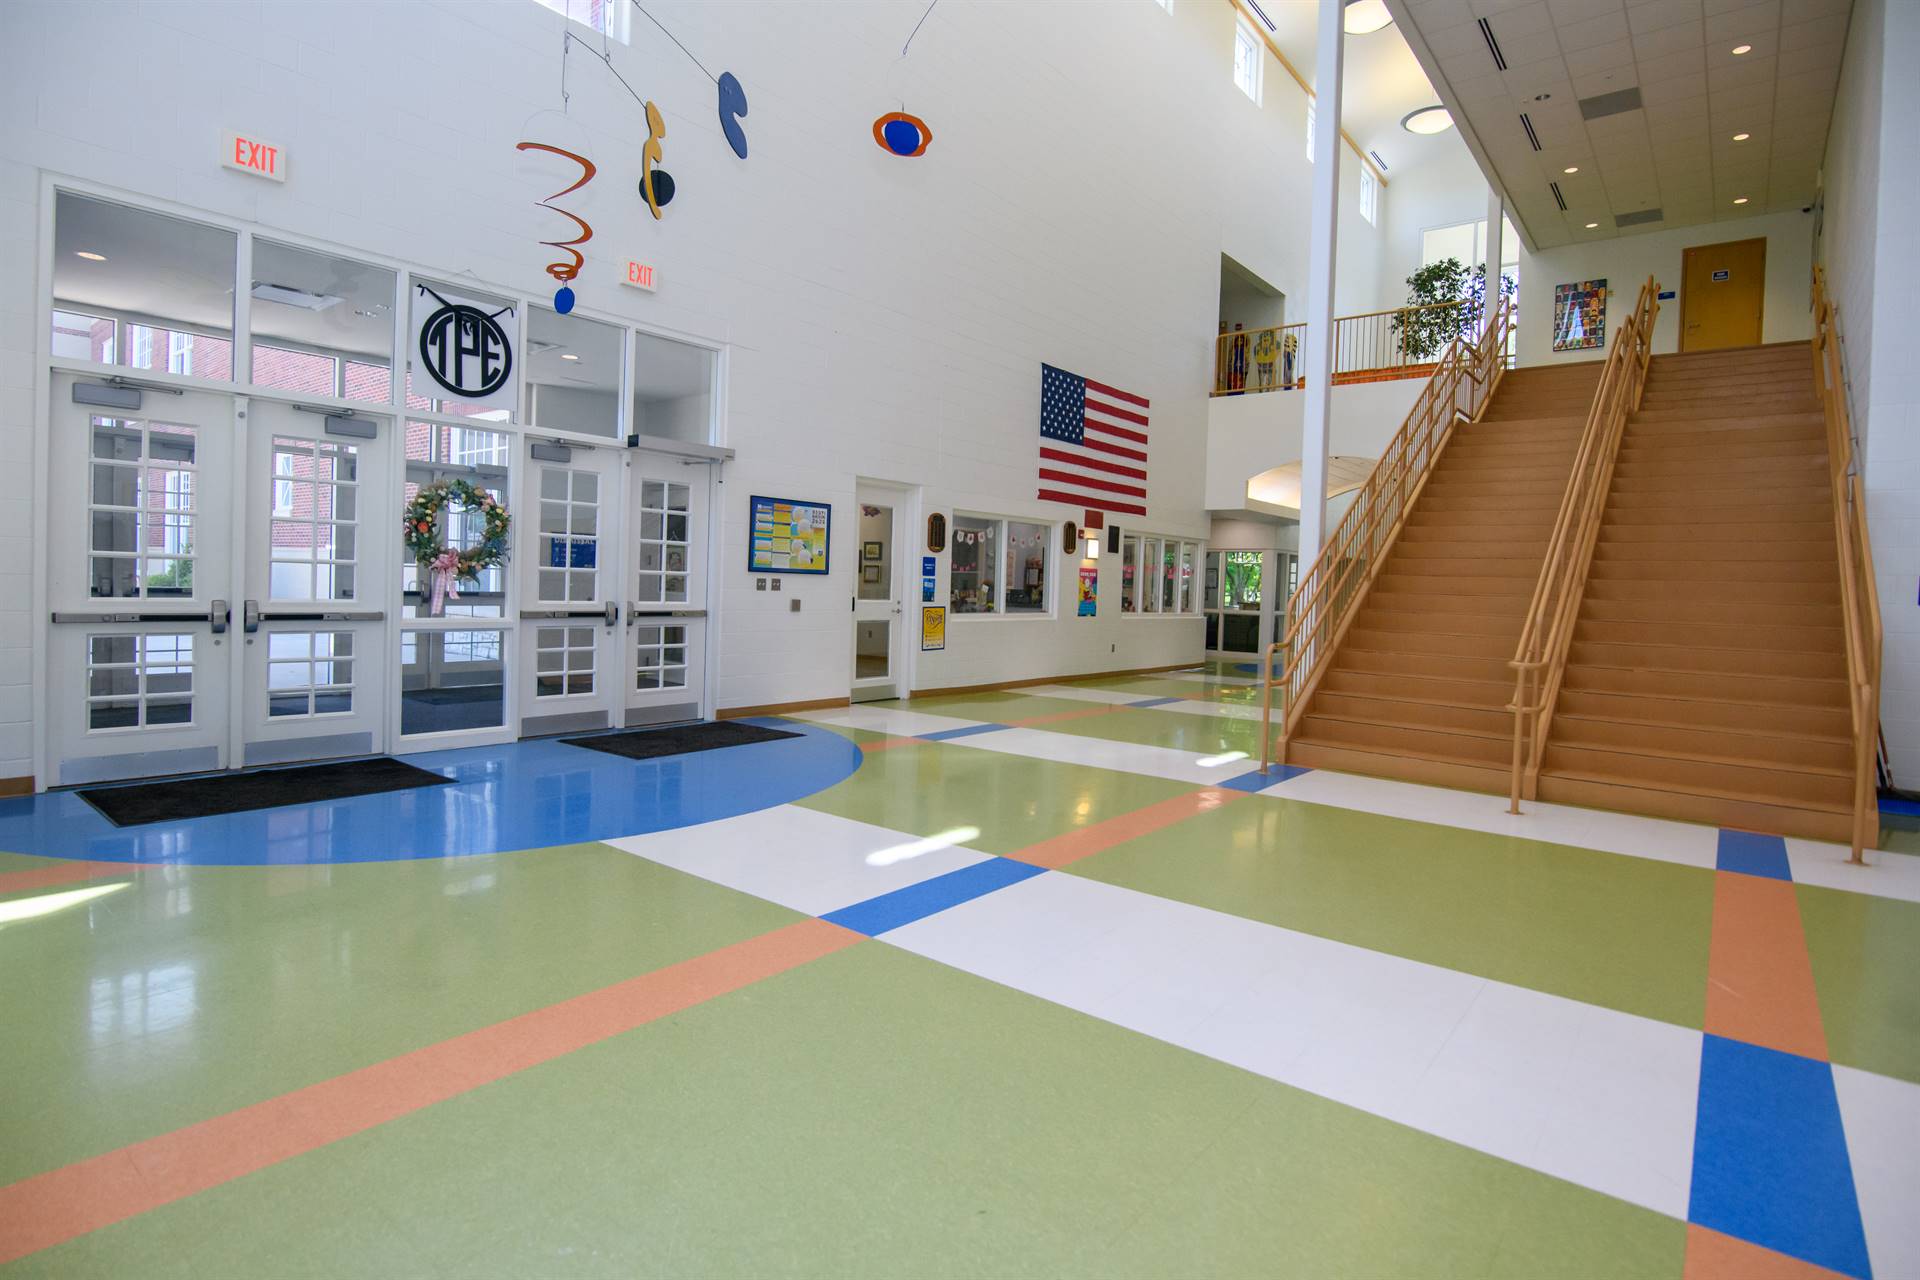 Terrace Park Elementary School entryway/vestibule